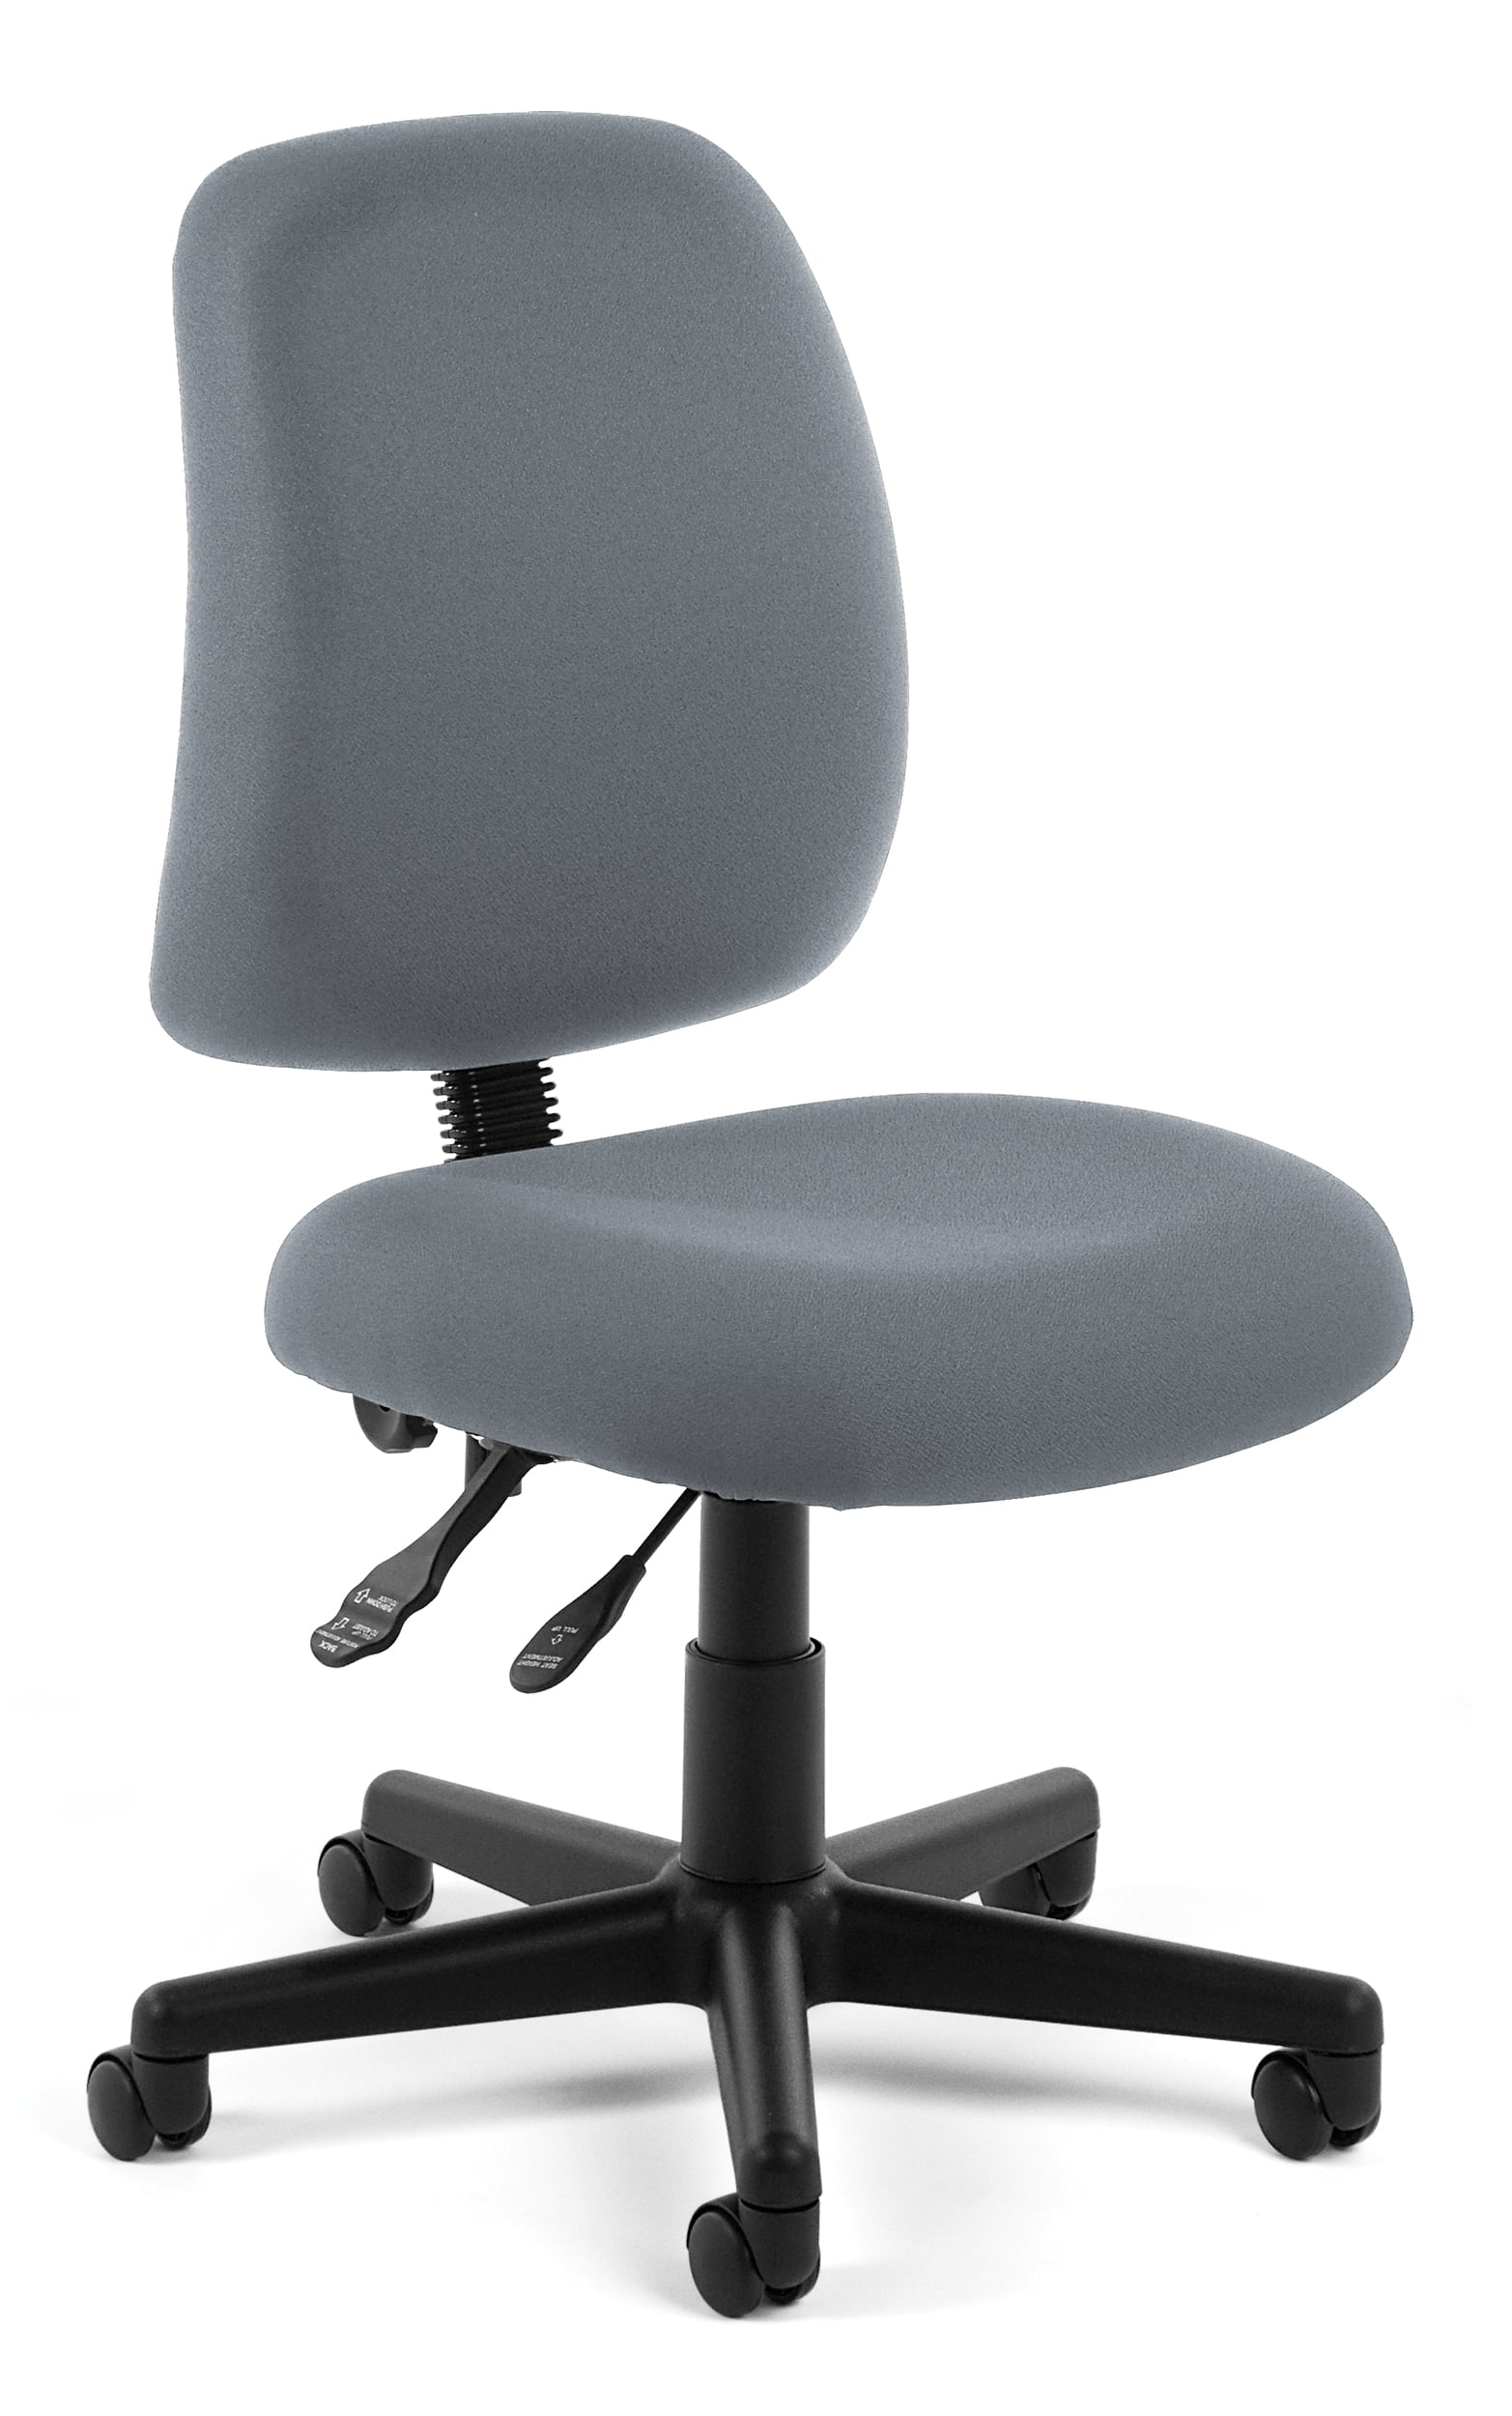 Office furniture GRAY Model 118-2 Posture Series Armless Fabric Swivel